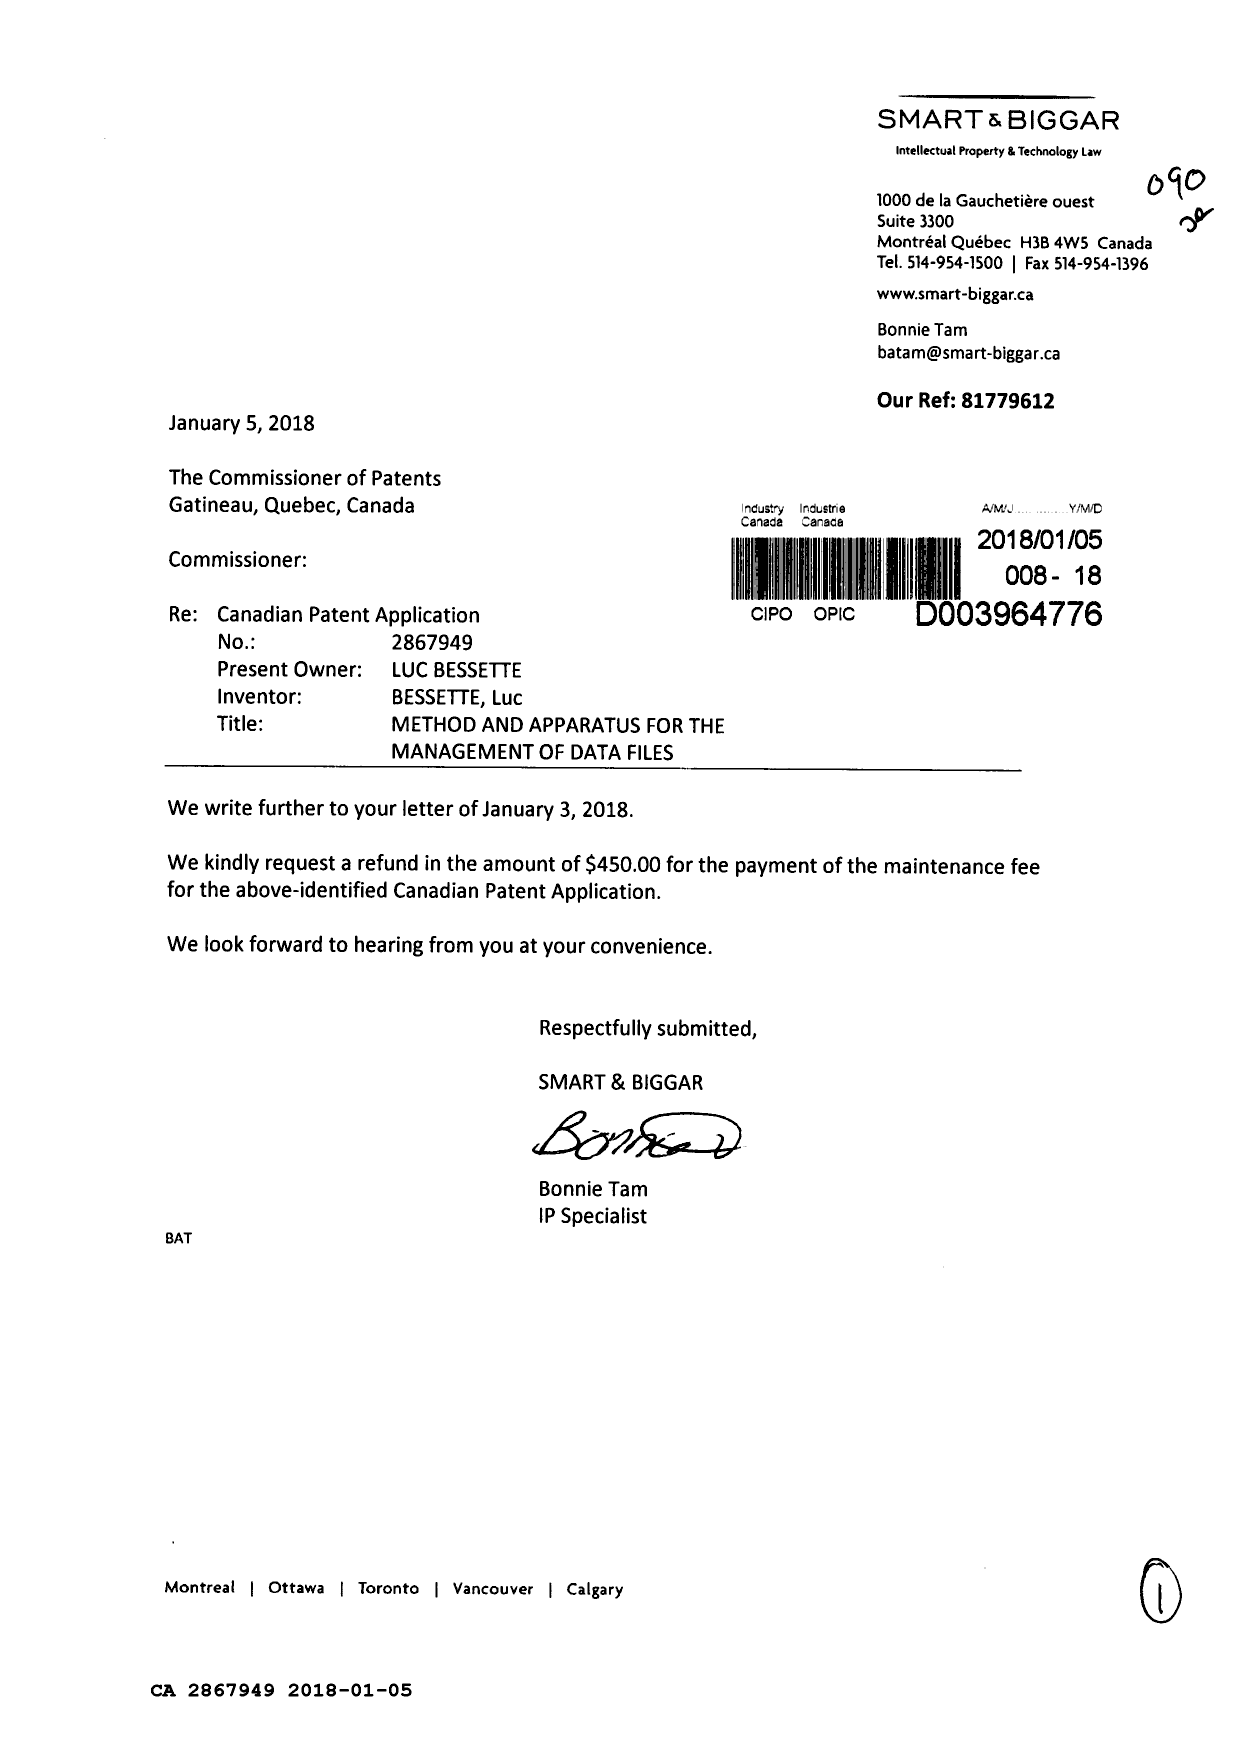 Document de brevet canadien 2867949. Remboursement 20180105. Image 1 de 1